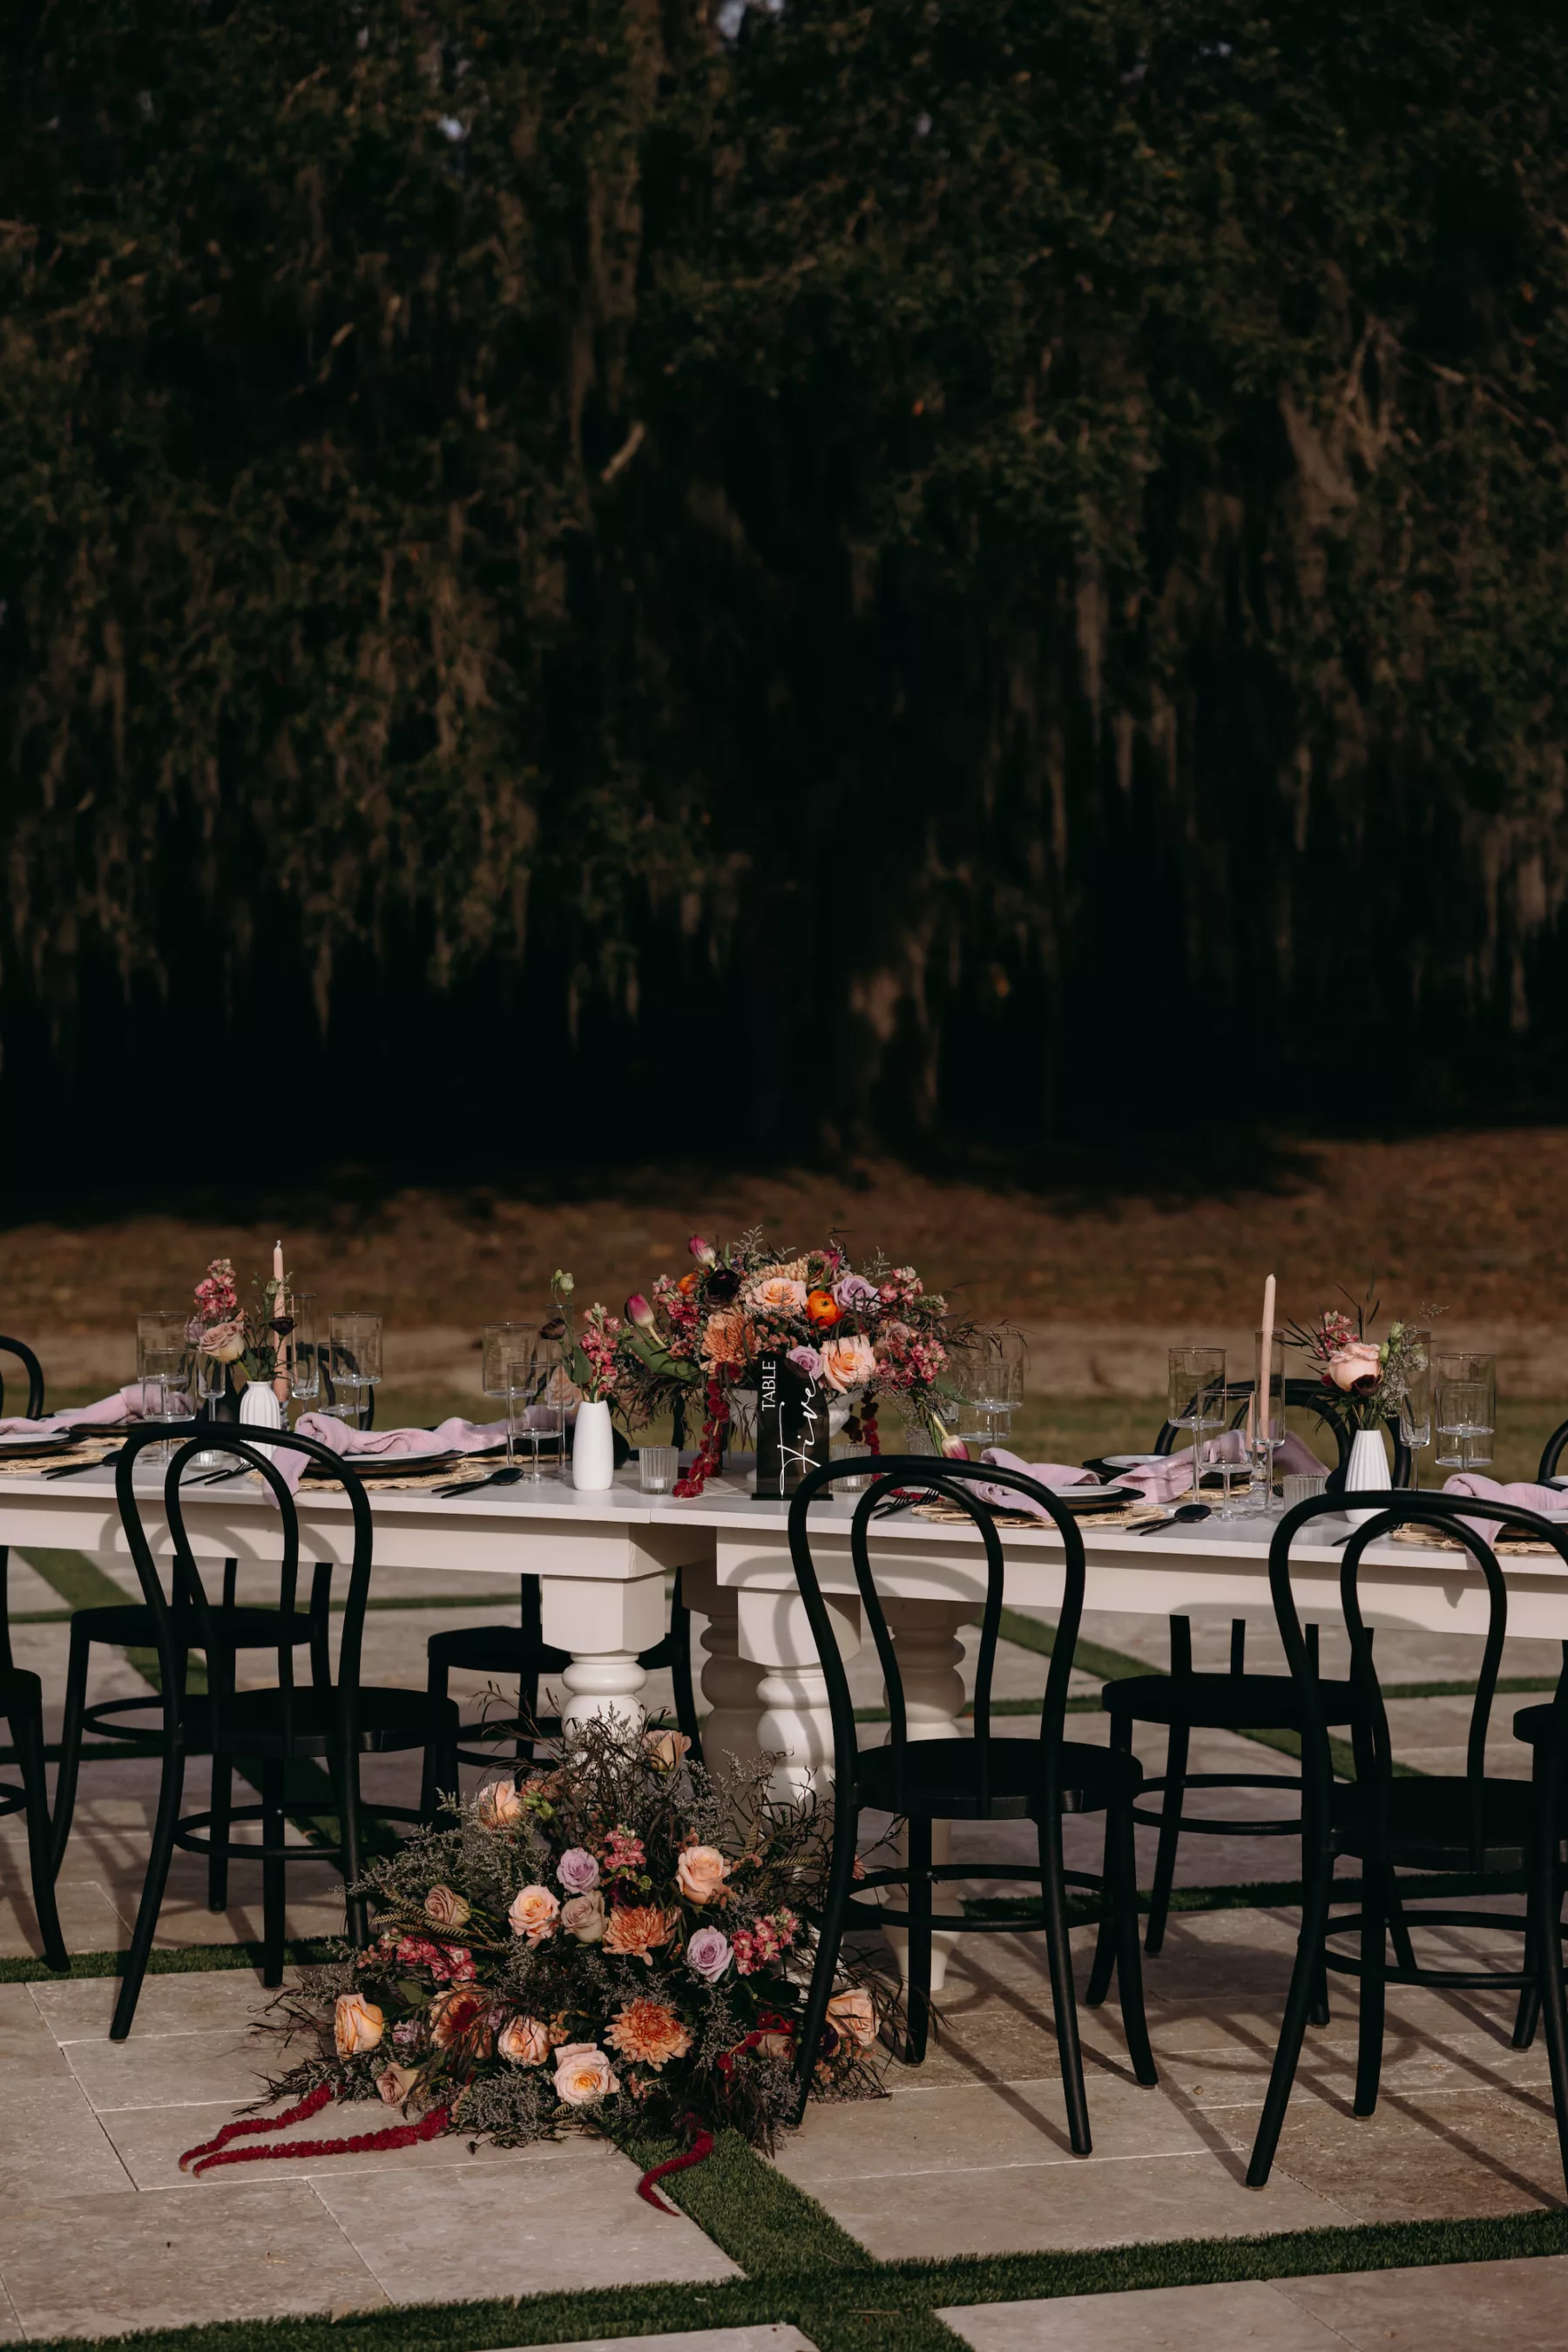 Moody Modern Peach and Purple Wedding Reception Feasting Table Ideas | Tampa Bay Event Venue La Hacienda at Snow Hill | Planner MDP Events